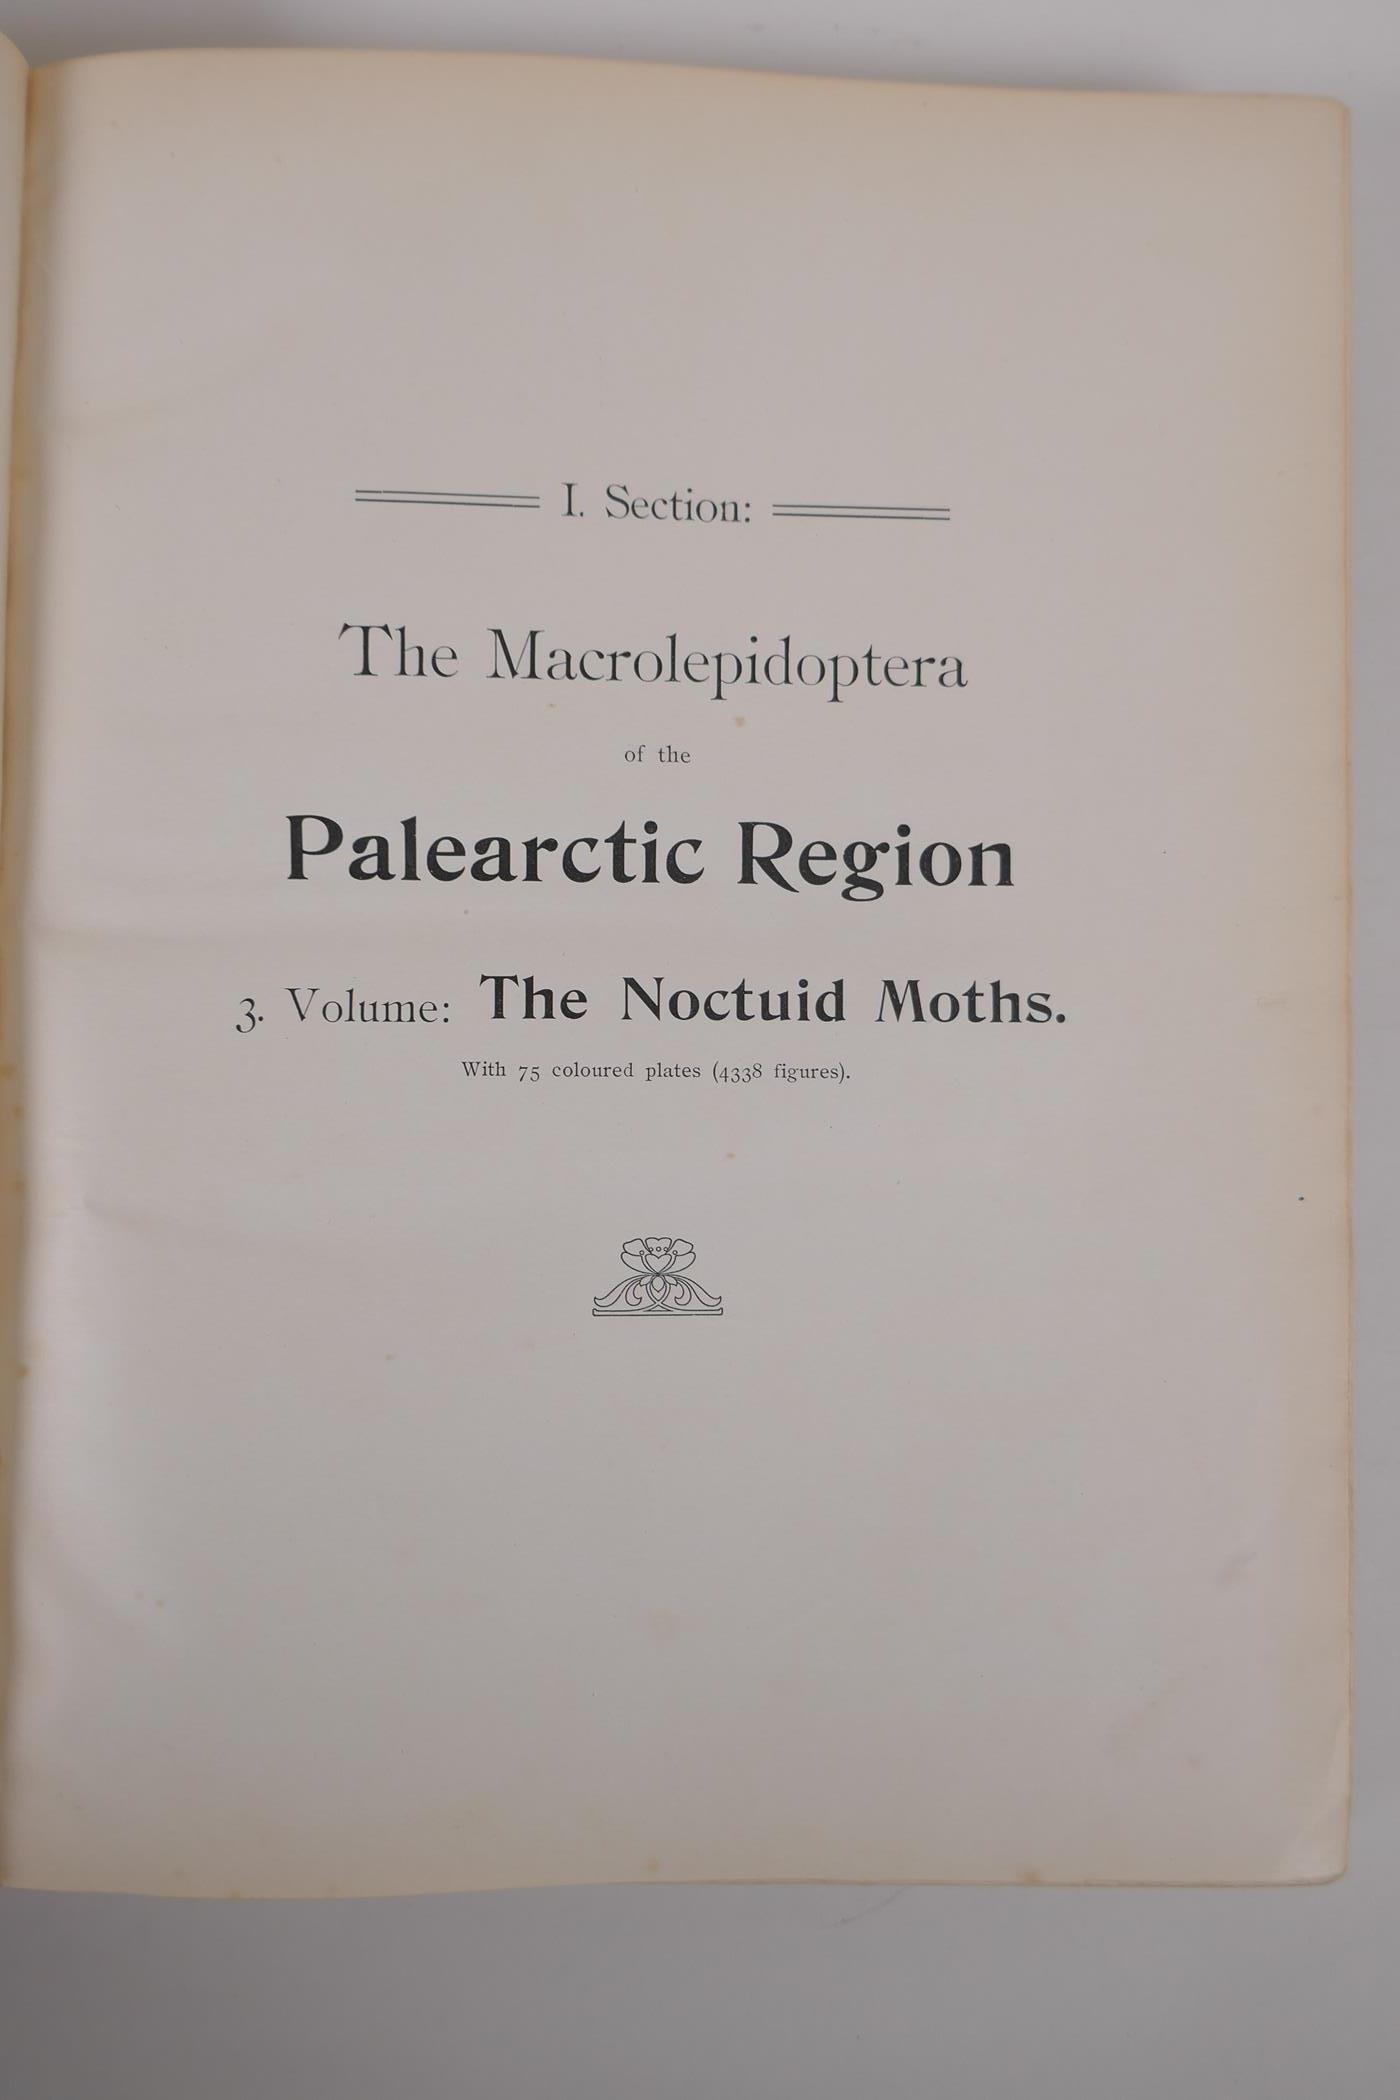 Dr Adalbert Seitz, The Macrolepidoptera of the World - The Macrolepidoptera of the Palearctic - Image 3 of 8